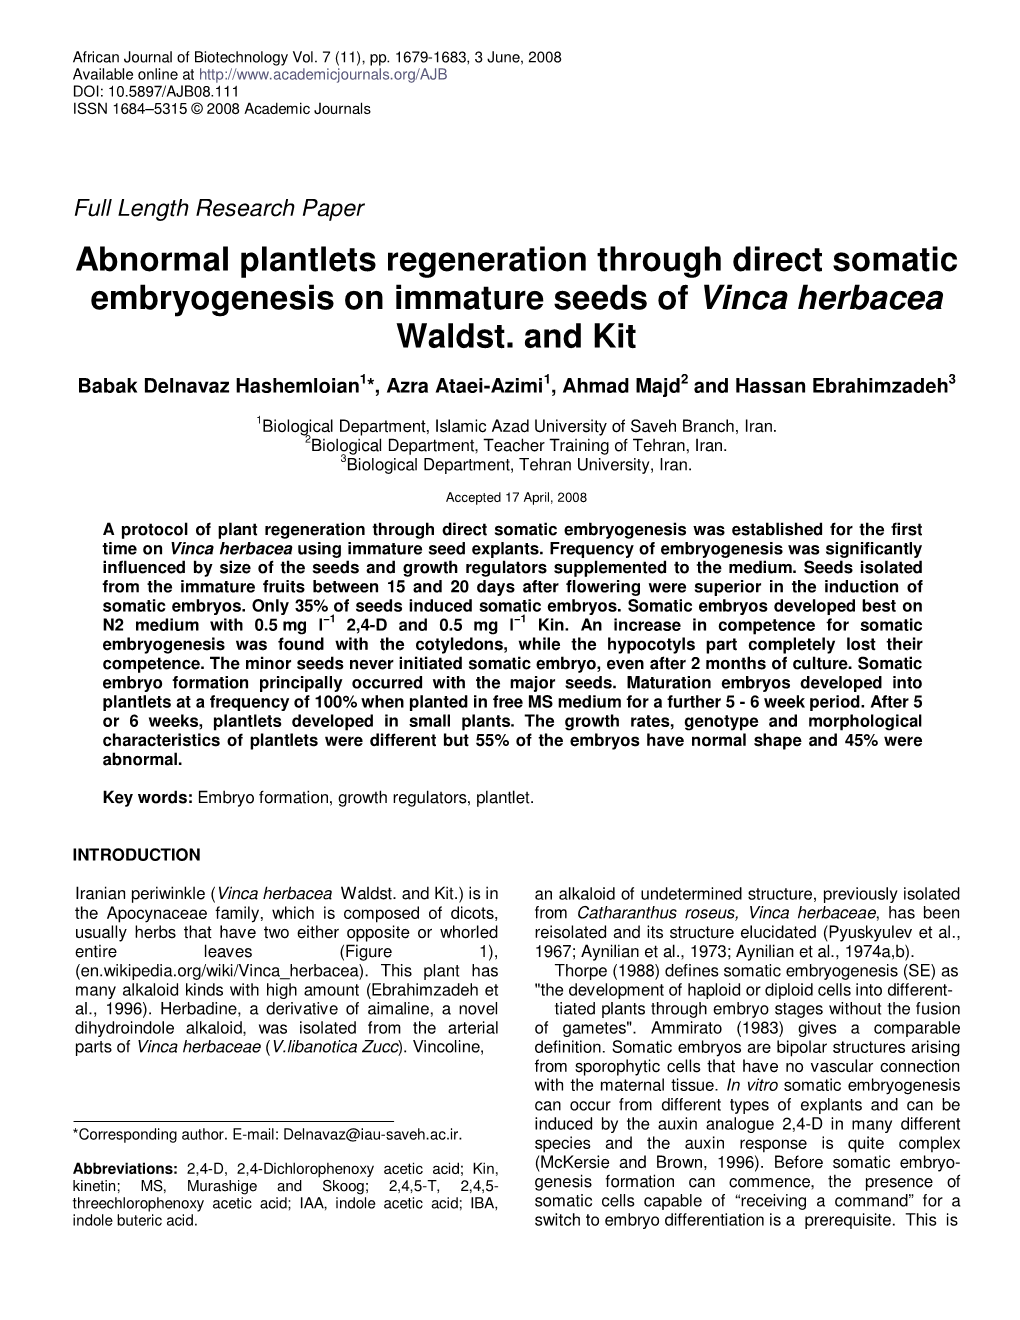 Abnormal Plantlets Regeneration Through Direct Somatic Embryogenesis on Immature Seeds of Vinca Herbacea Waldst